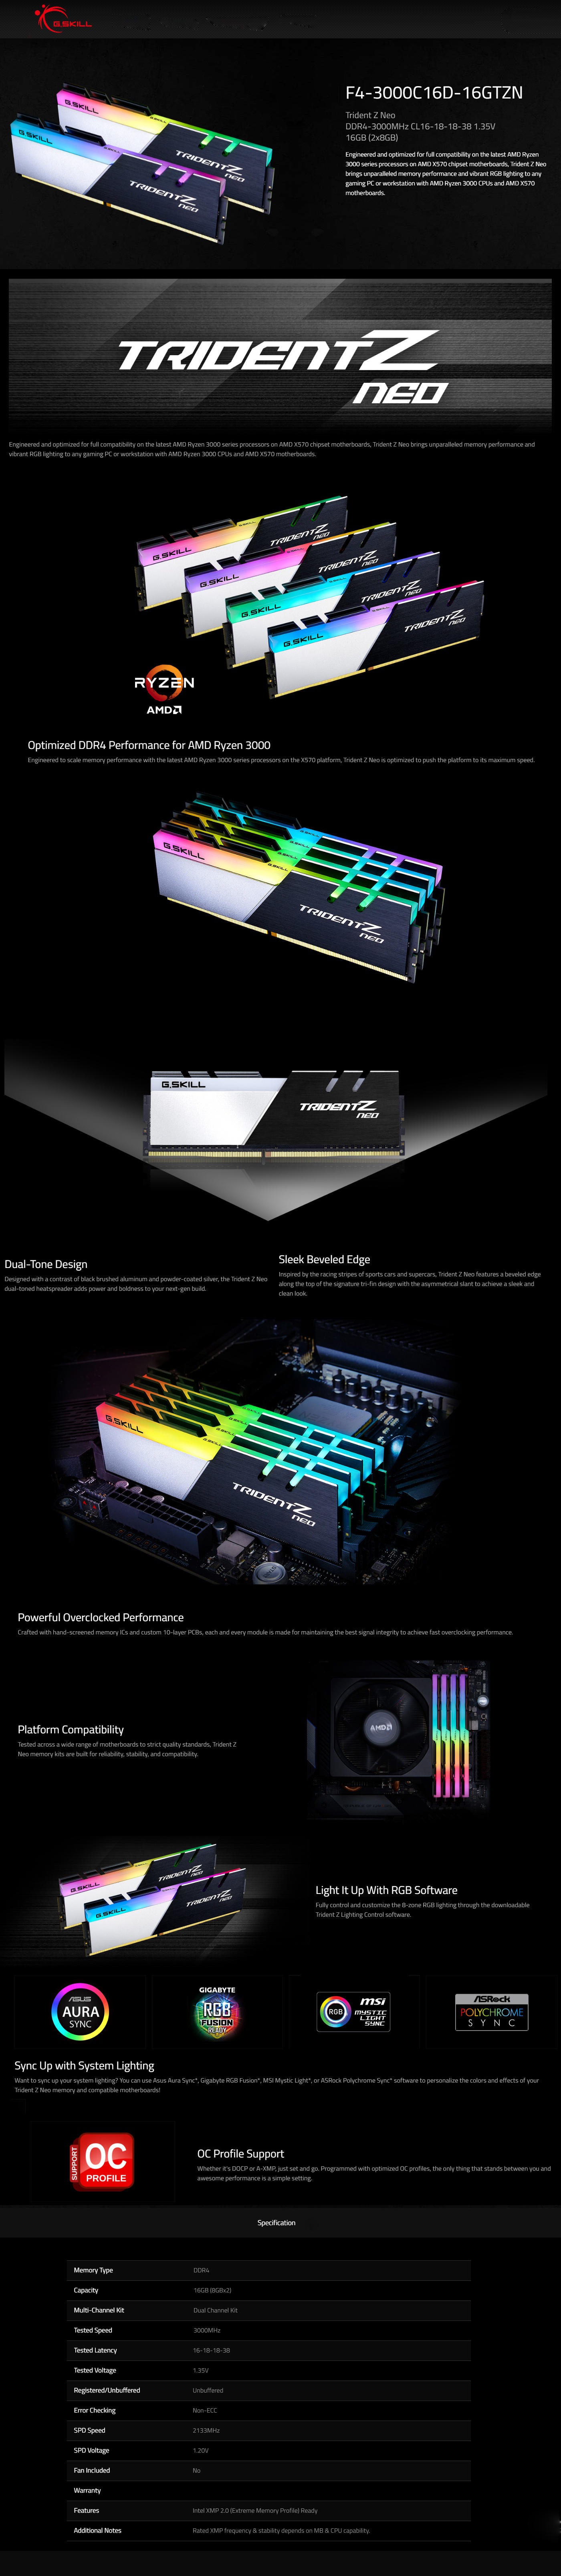 Buy Online G.skill Trident Z Neo 16GB (2 x 8GB) DDR4 3000MHz Desktop RAM (F4-3000C16D-16GTZN)